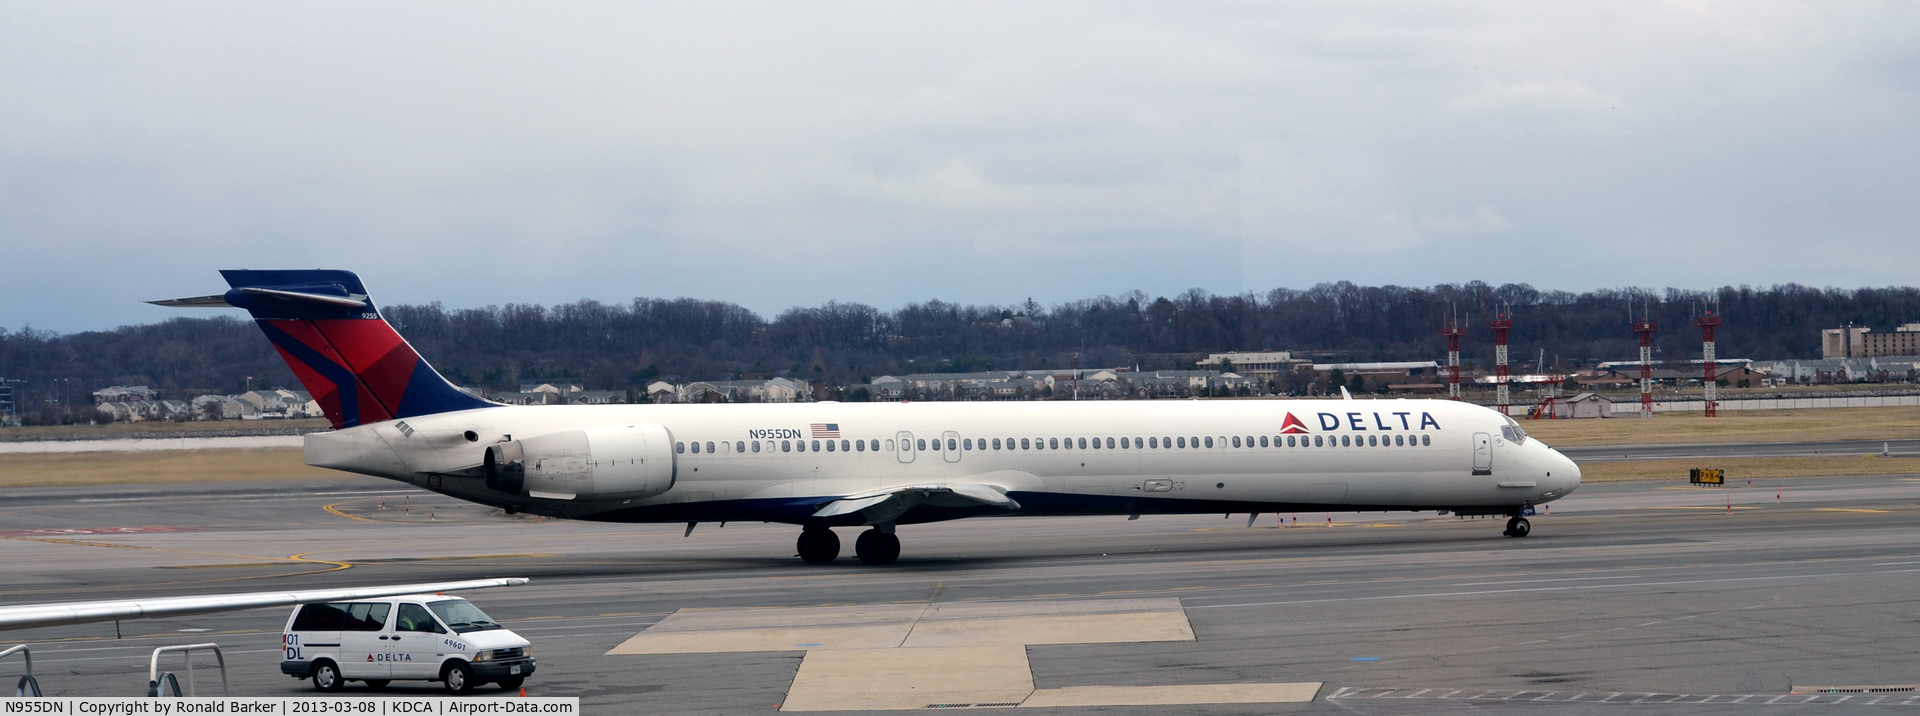 N955DN, McDonnell Douglas MD-90-30 C/N 53525, Taxi DCA